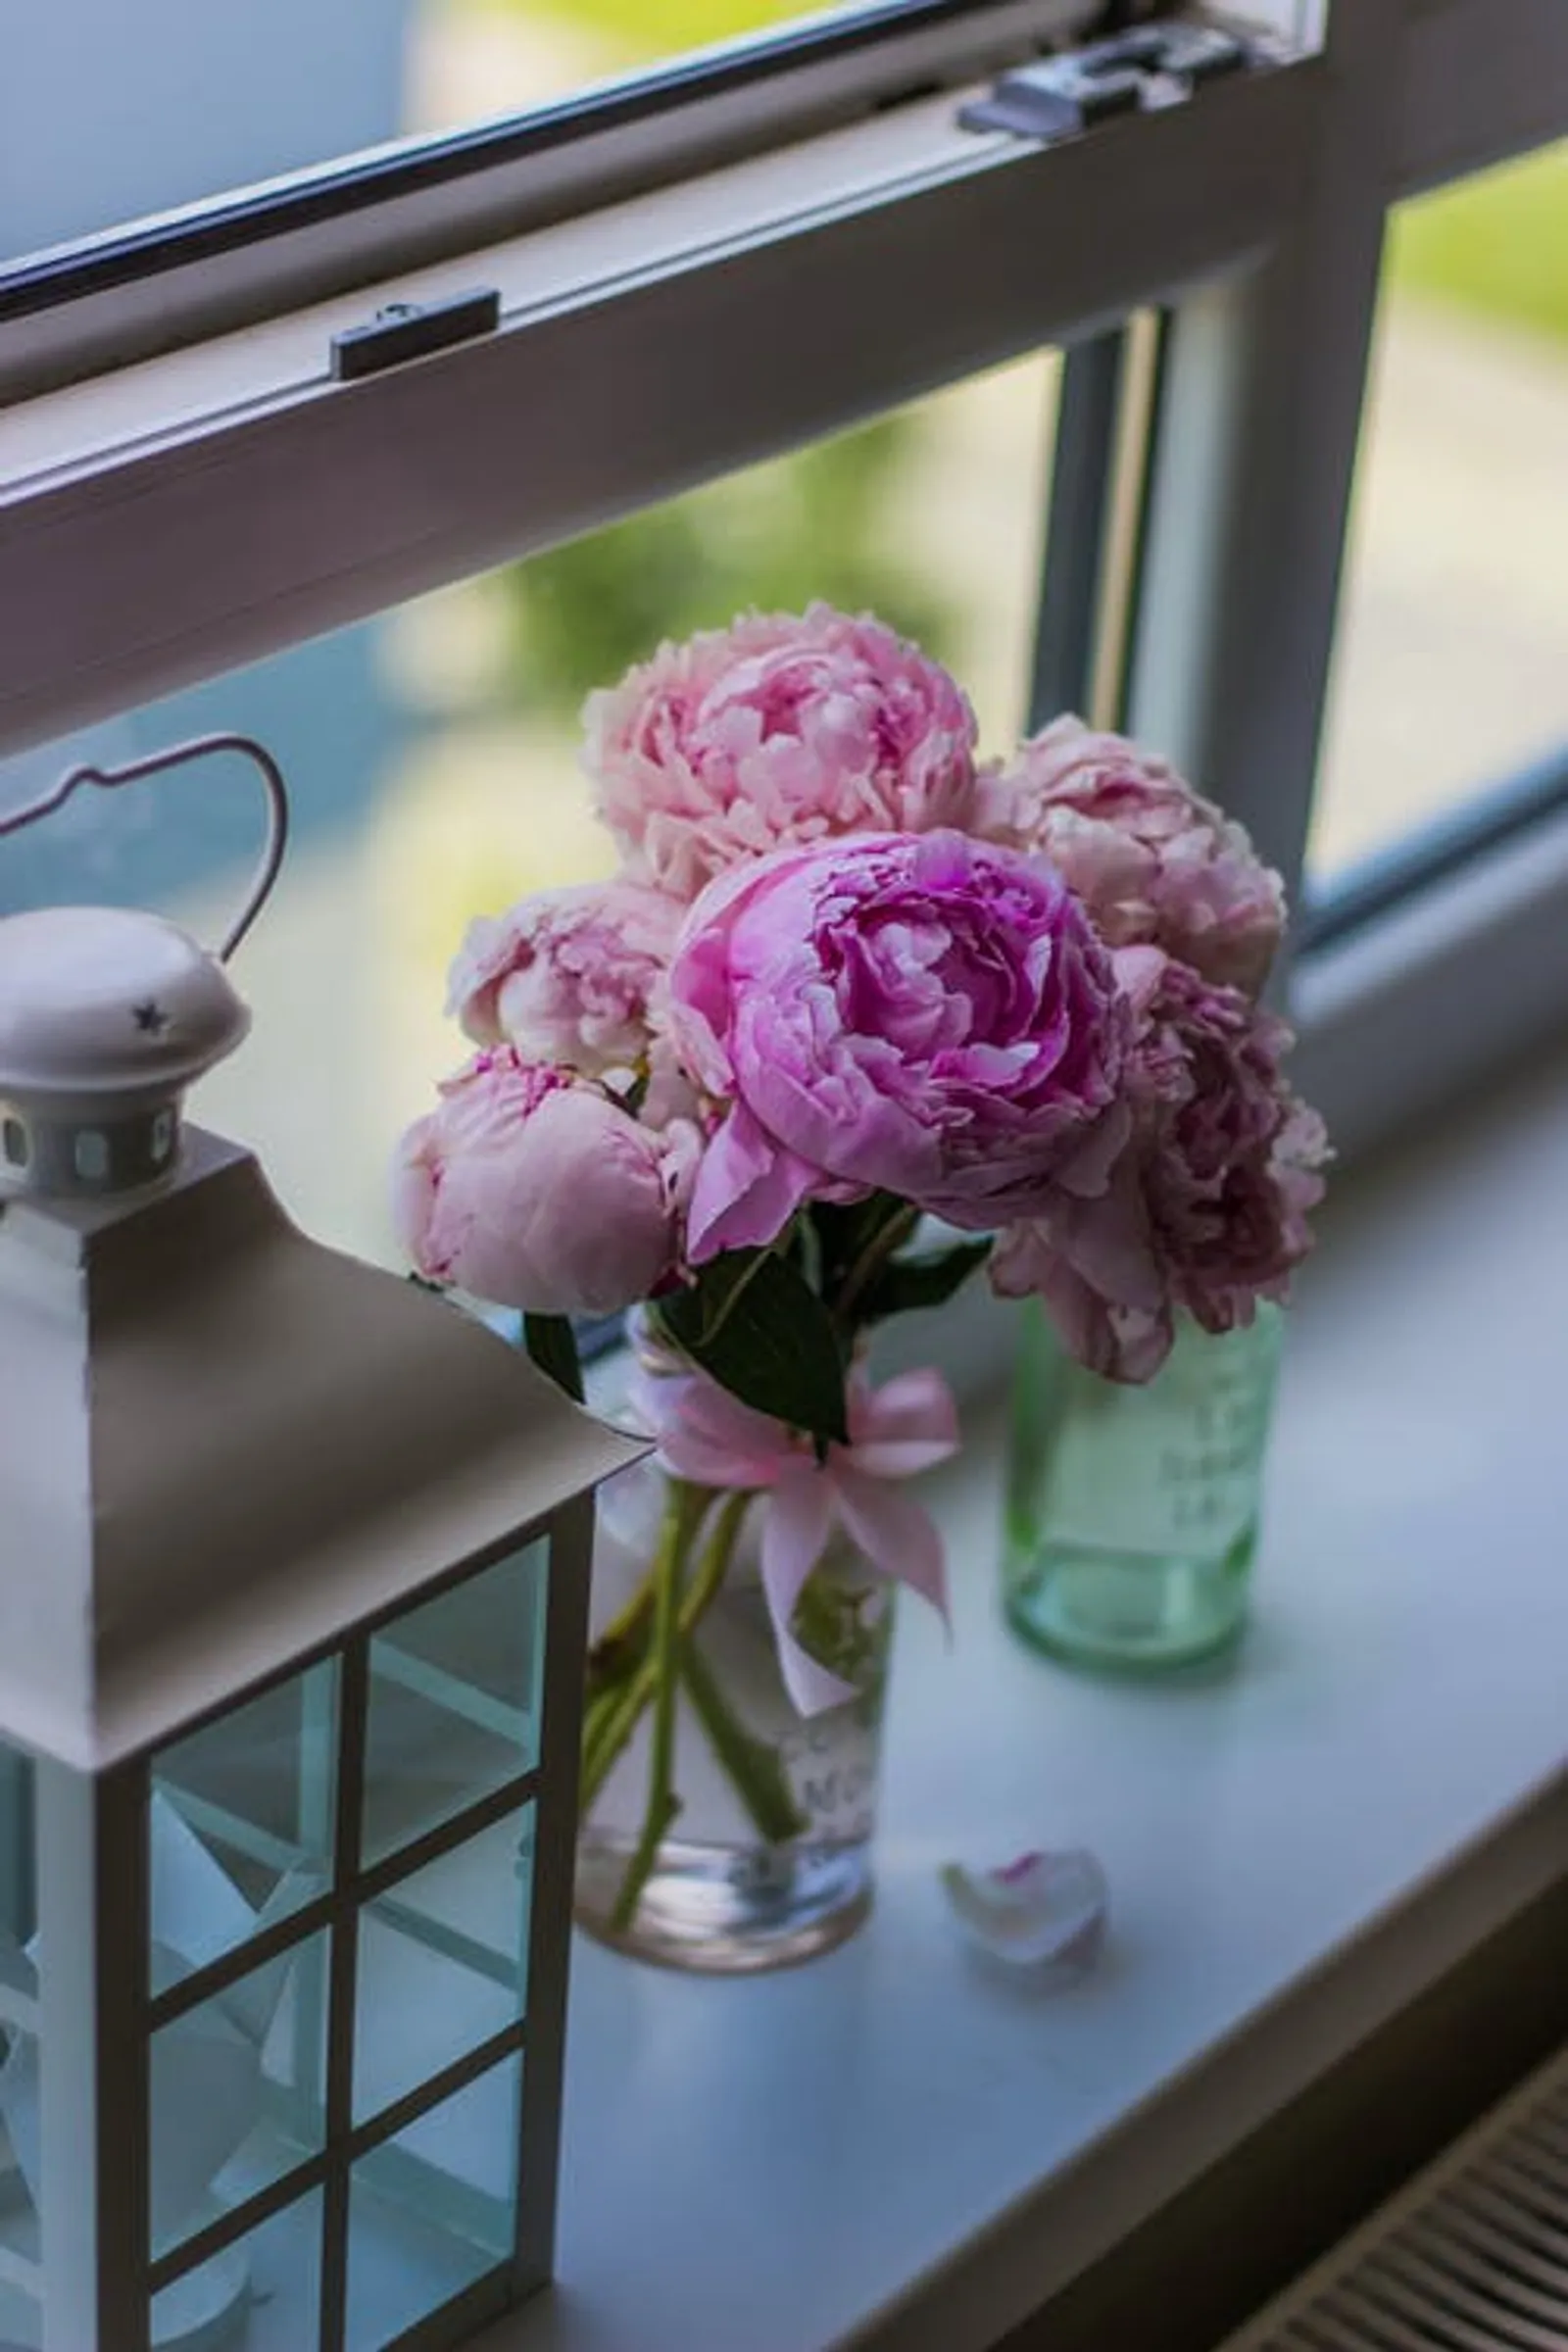 Lebih Tahan Lama, Ini 5 Tips Merawat Bunga di Dalam Vas